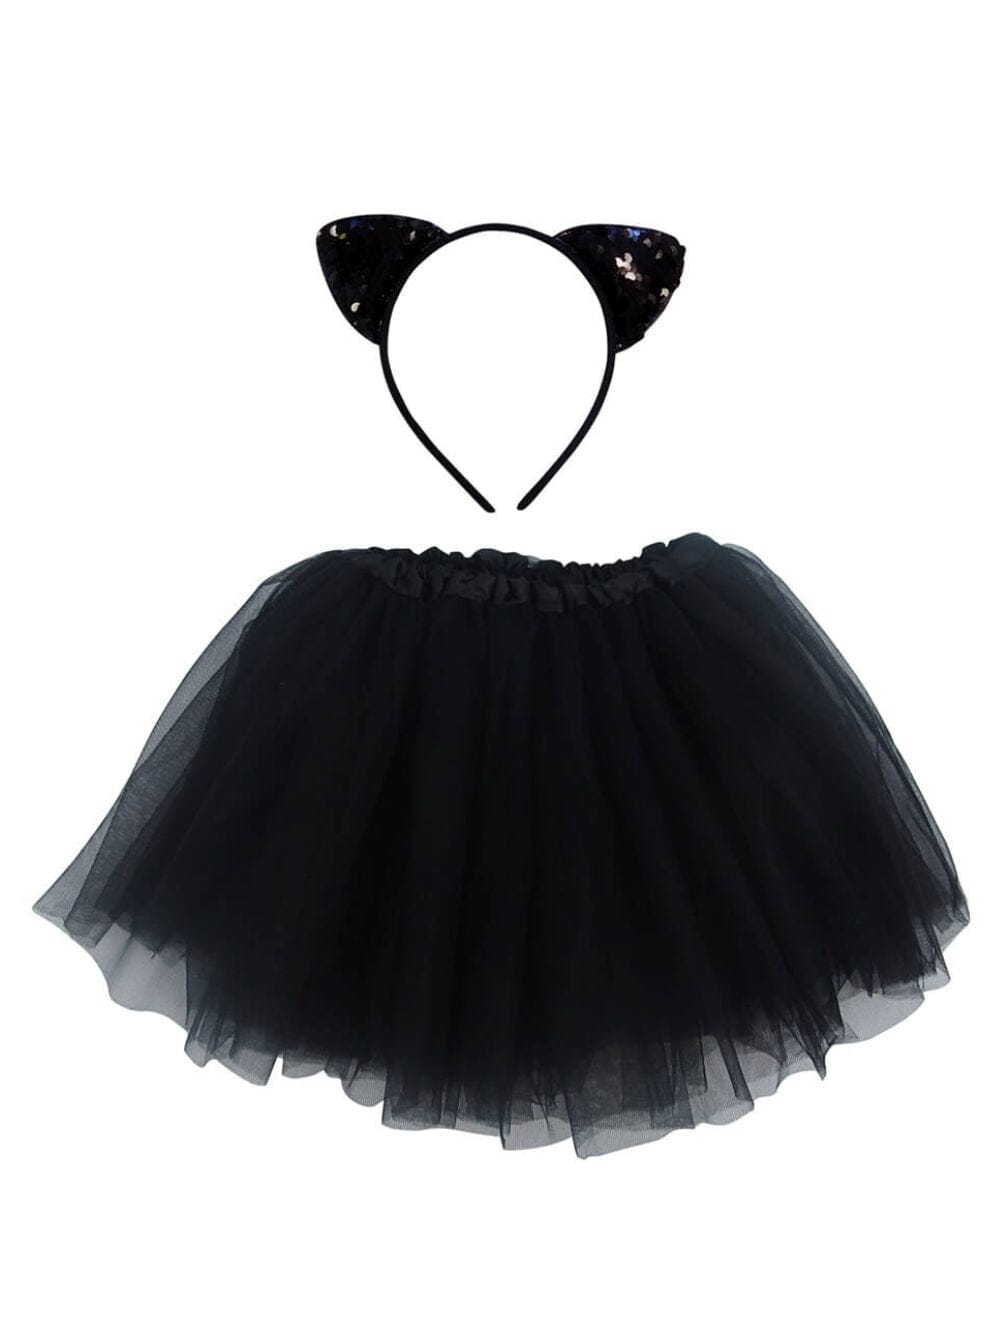 Girls Black Cat Costume - Complete Kids Costume Set with Tutu & Flip Sequin Cat Ears Headband - Sydney So Sweet